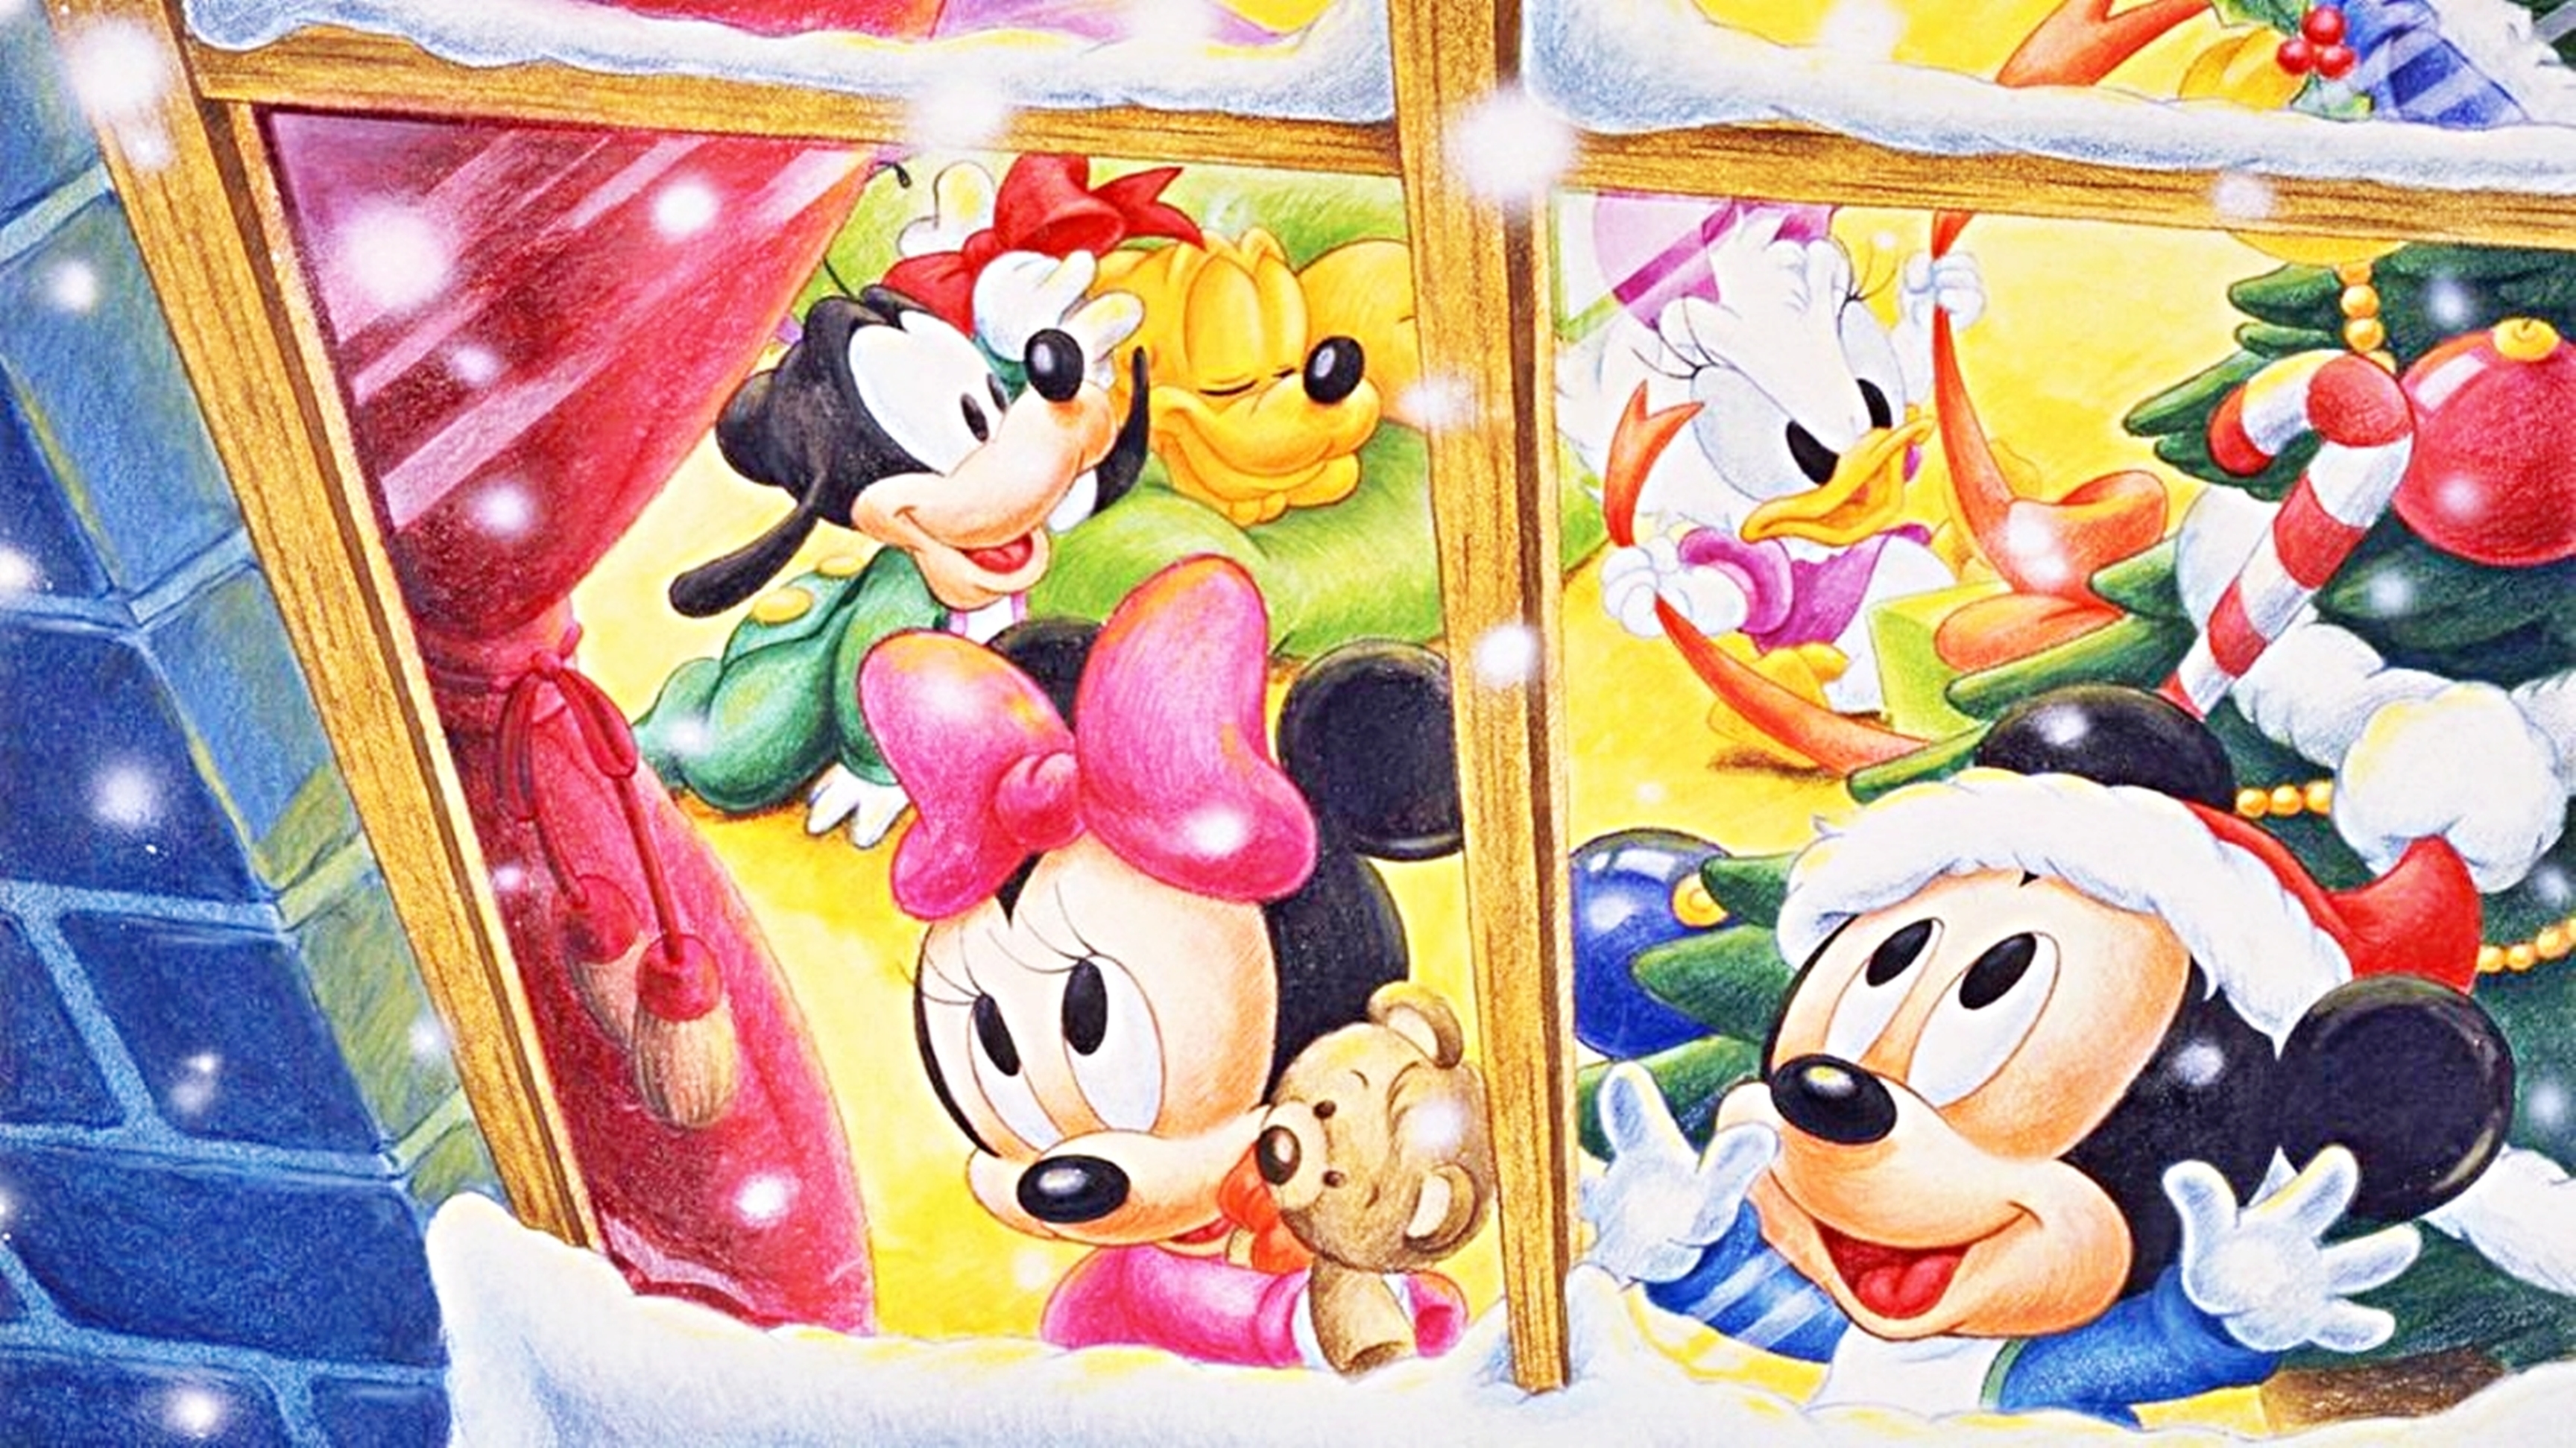 Immagini Natalizie Walt Disney.Walt Disney Wallpaper A Very Disney Natale Personaggi Disney Foto 32920193 Fanpop